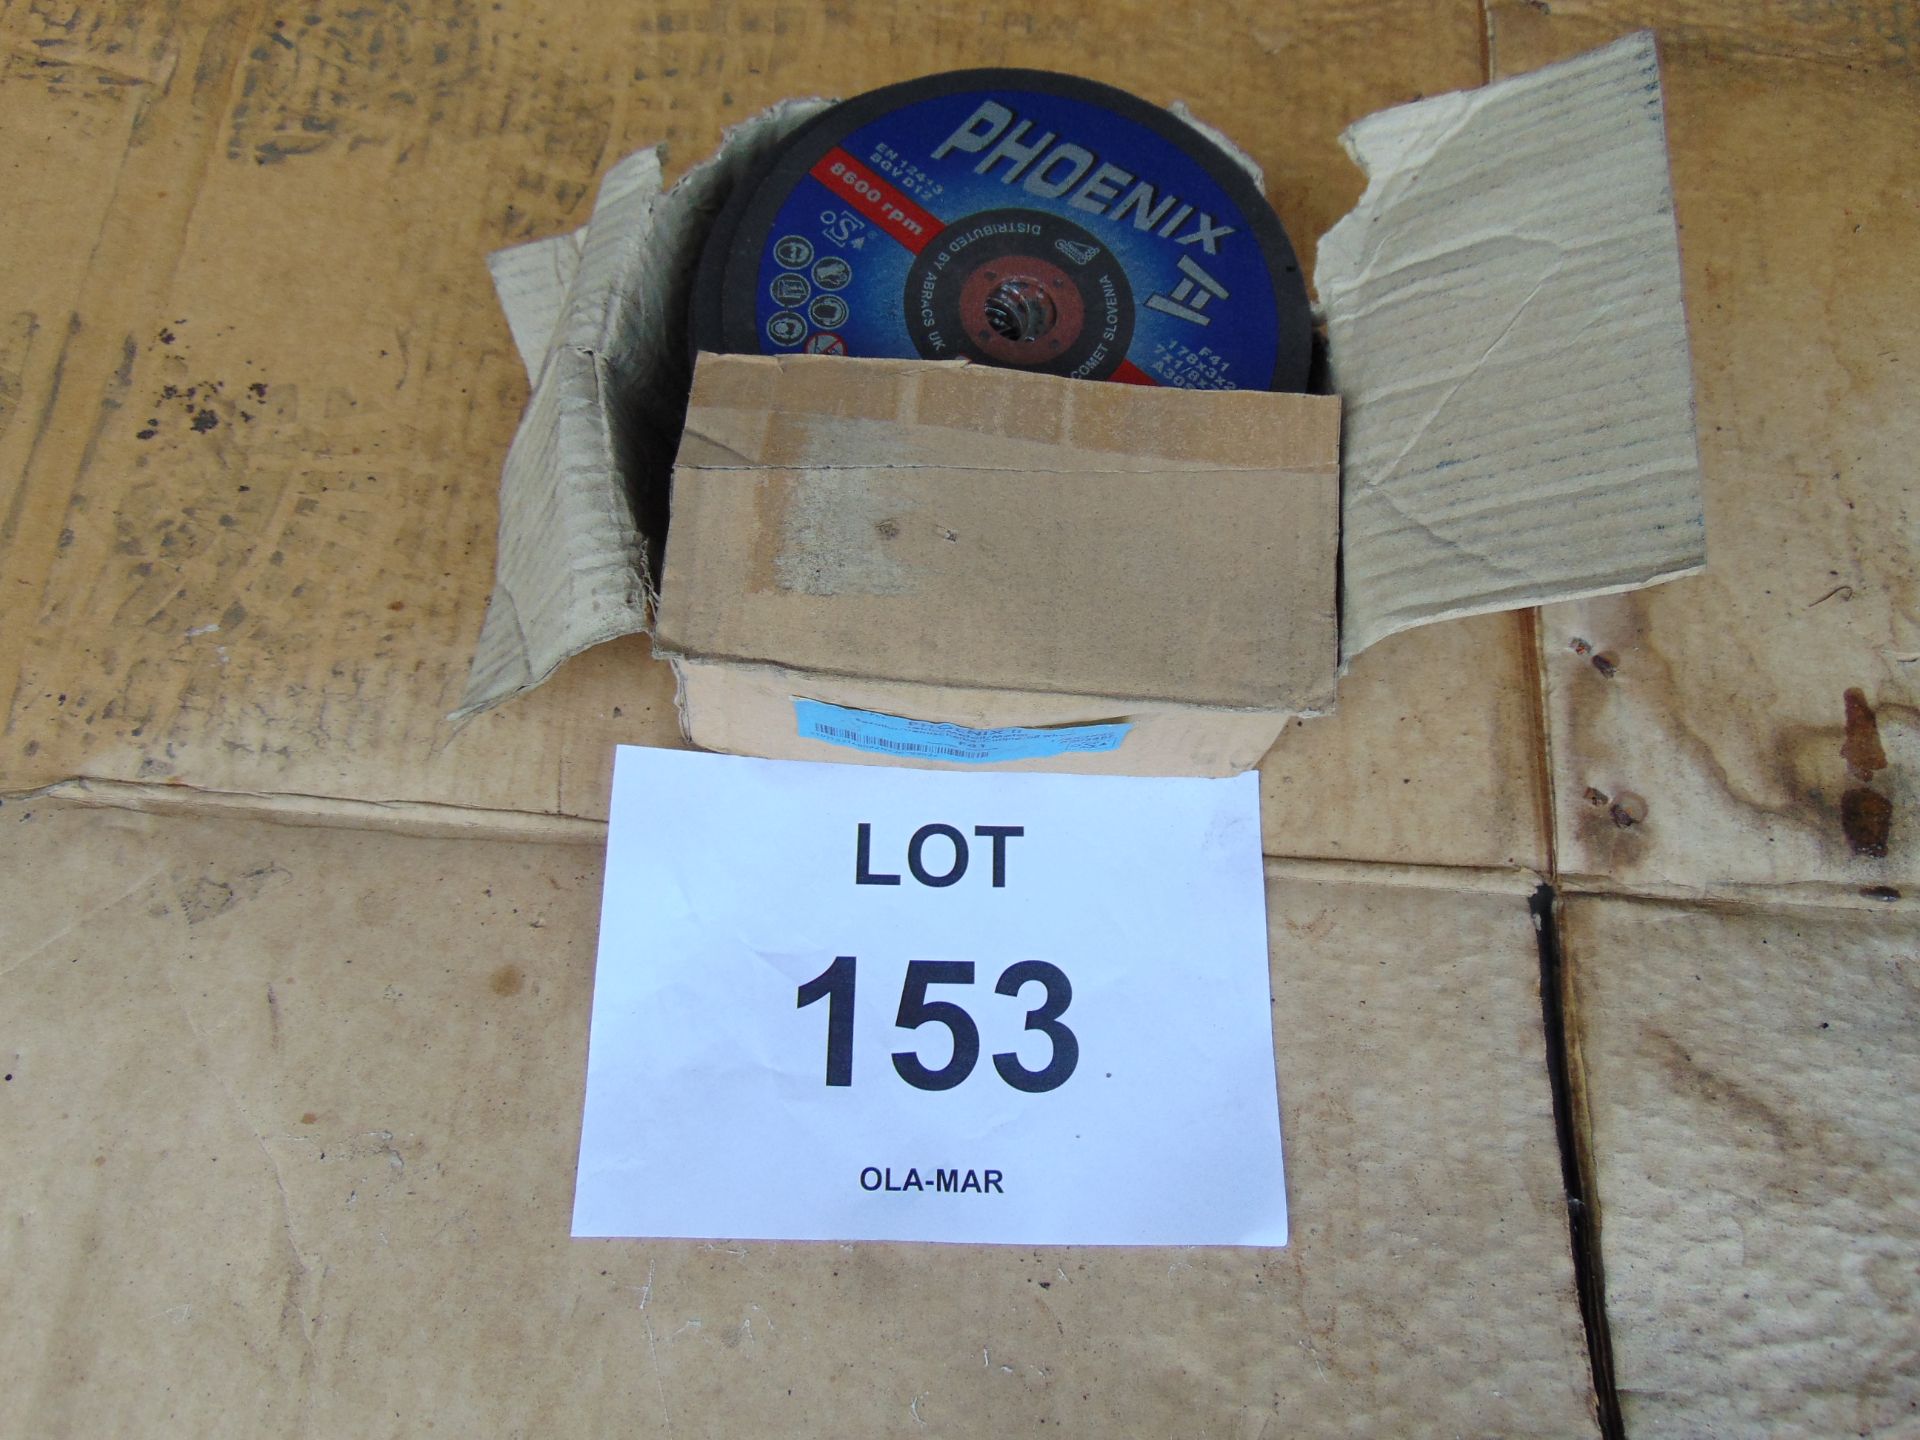 1 x Box of 25 Phoenix Metal Cutting Discs - Image 4 of 4